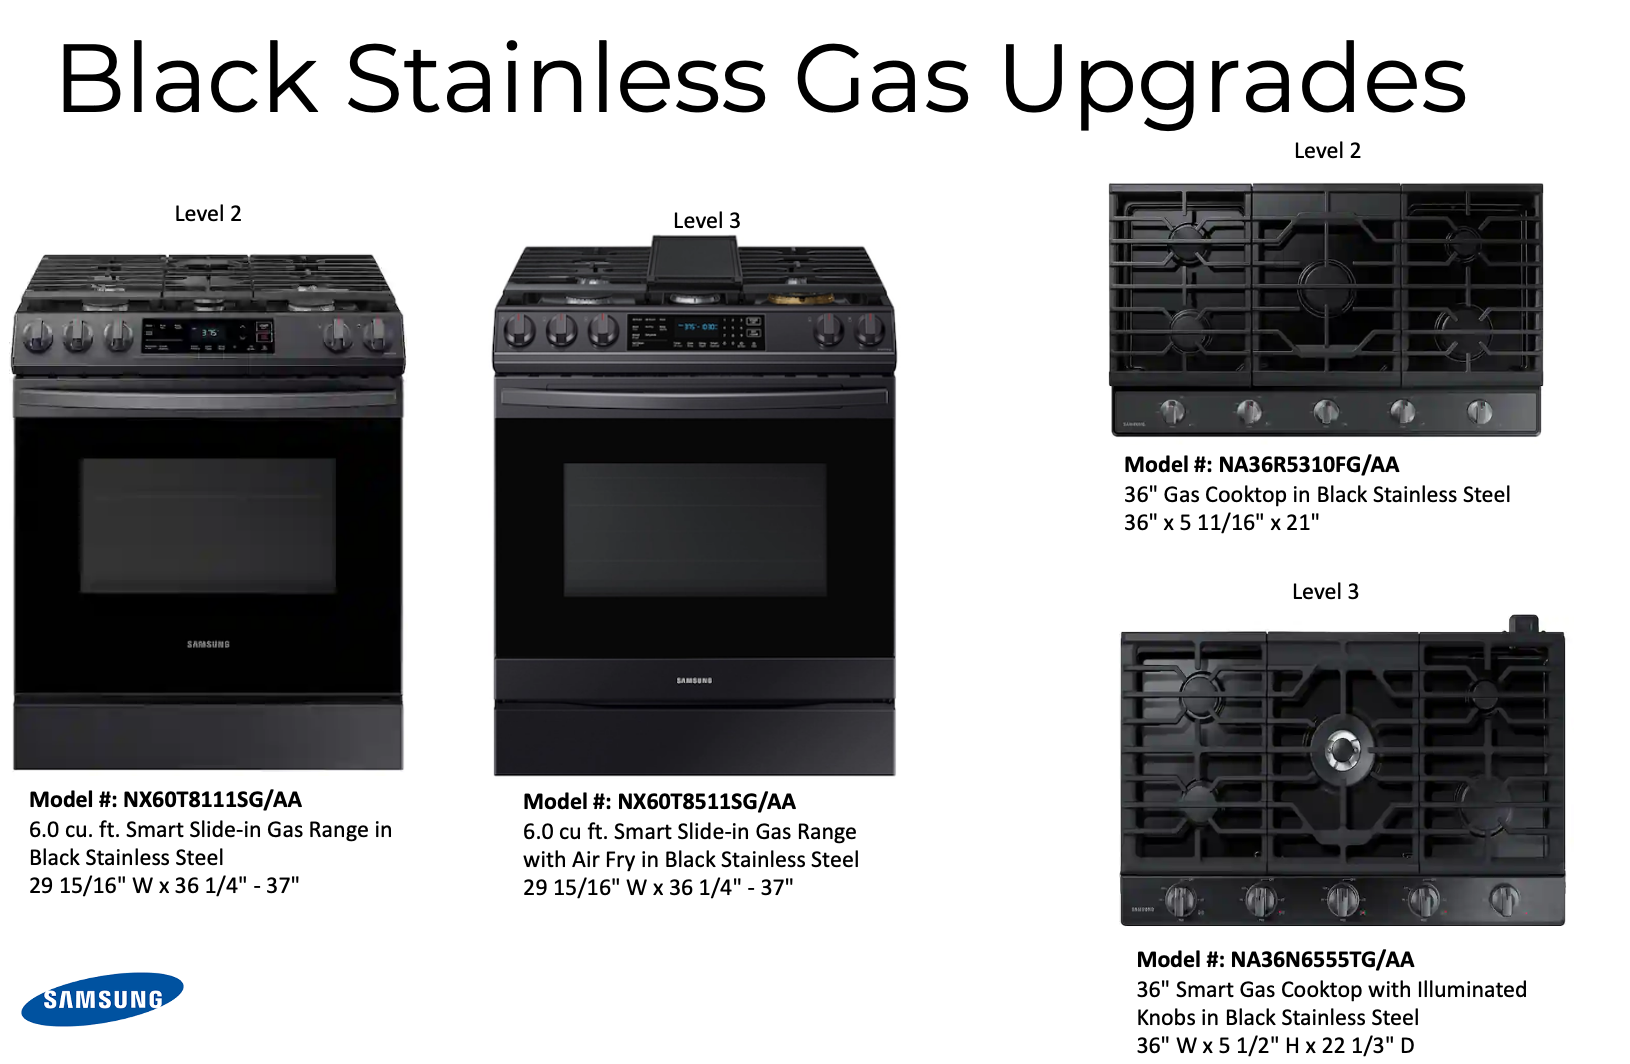 Black Stainless Gas Upgrade